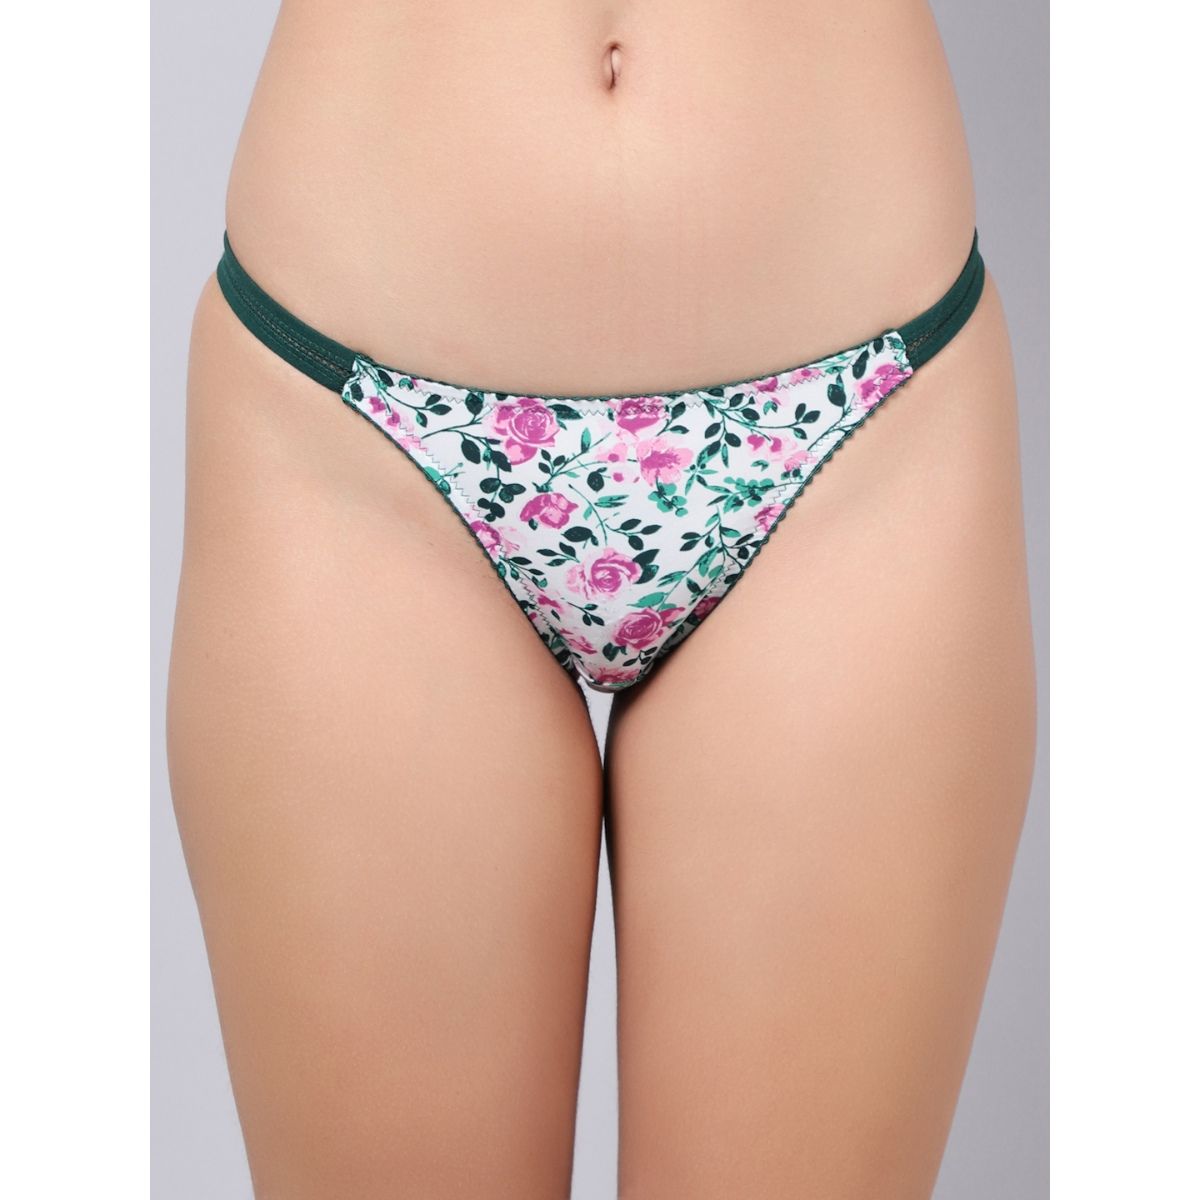 Erotissch Women Green Floral Printed Thongs Brief Panty Buy Erotissch